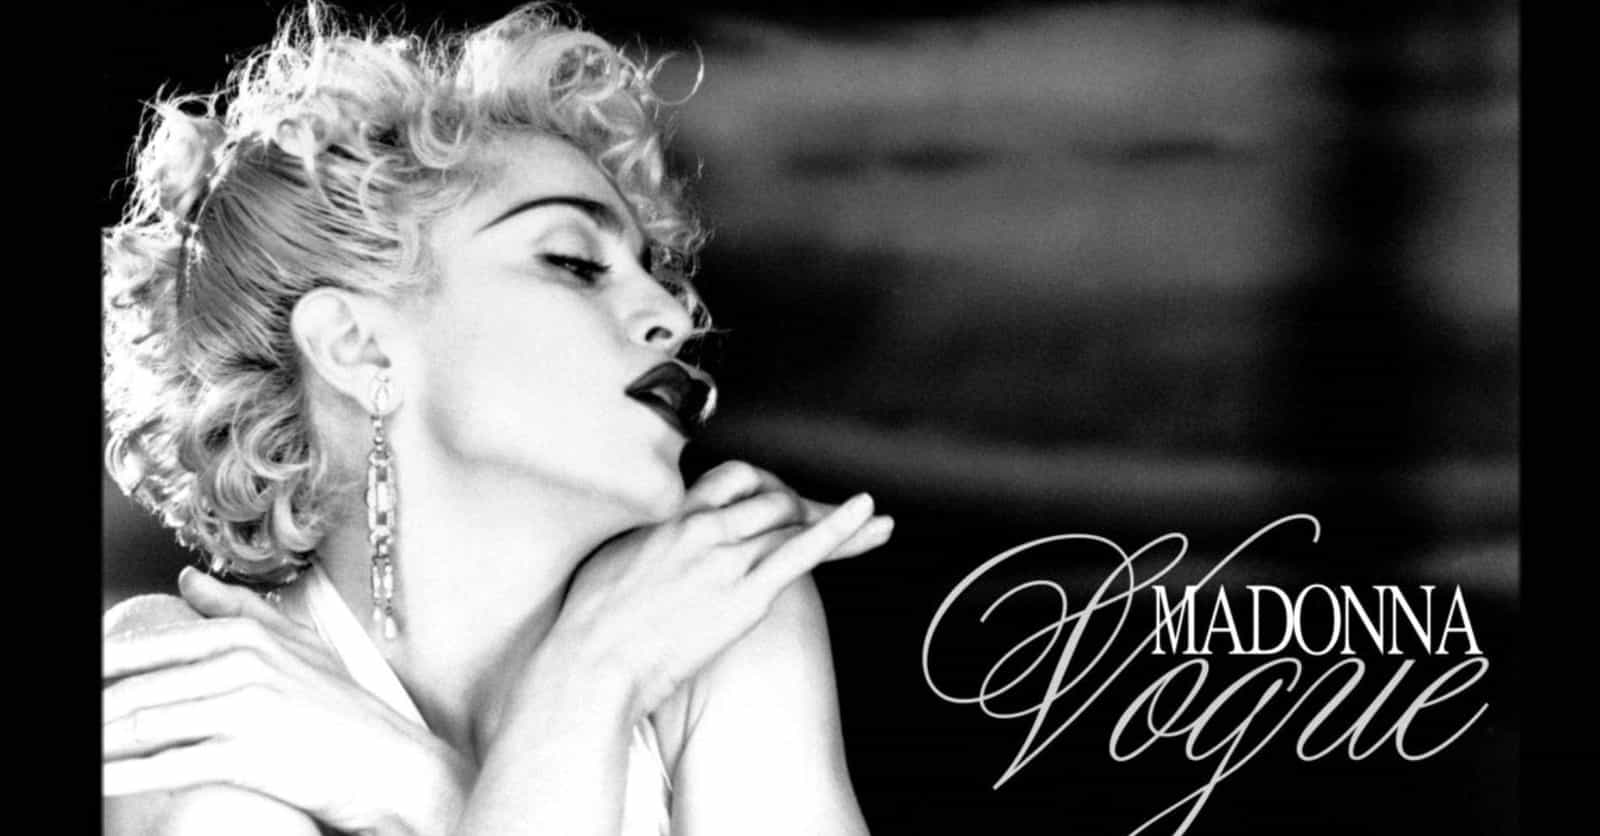 The Best Madonna Music Videos